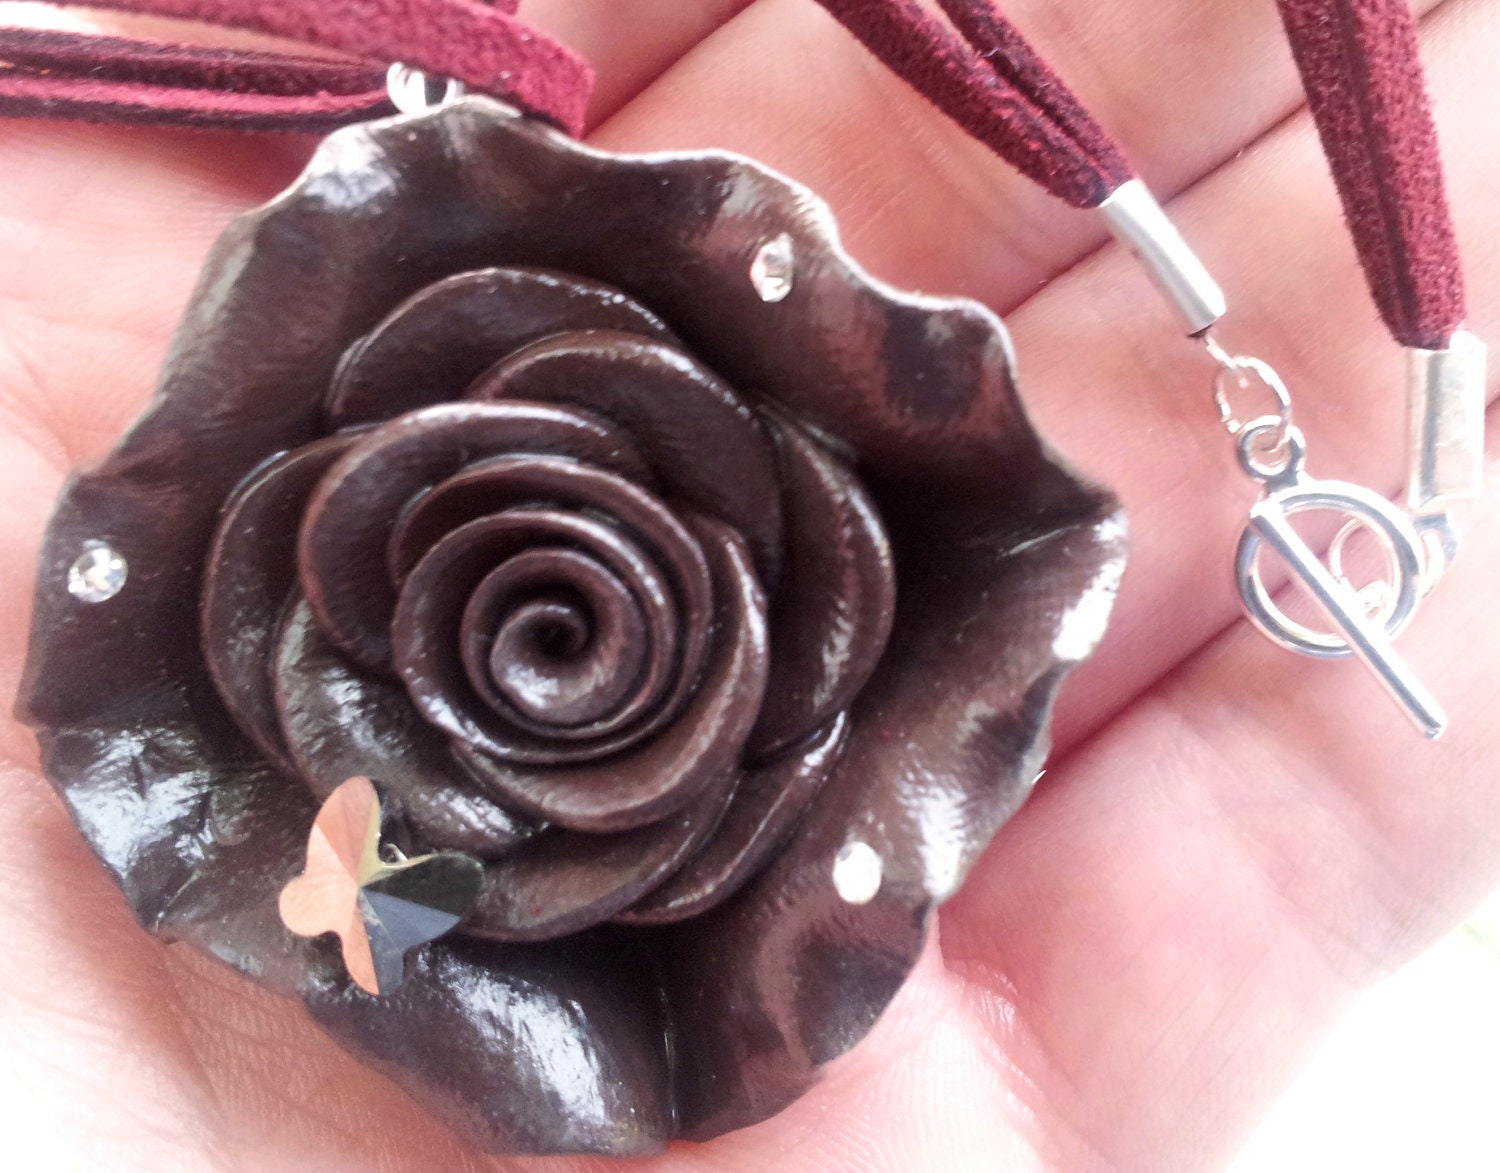 Stunning Chocolate Rose Necklace Jewelry - EleganceOfAntonio